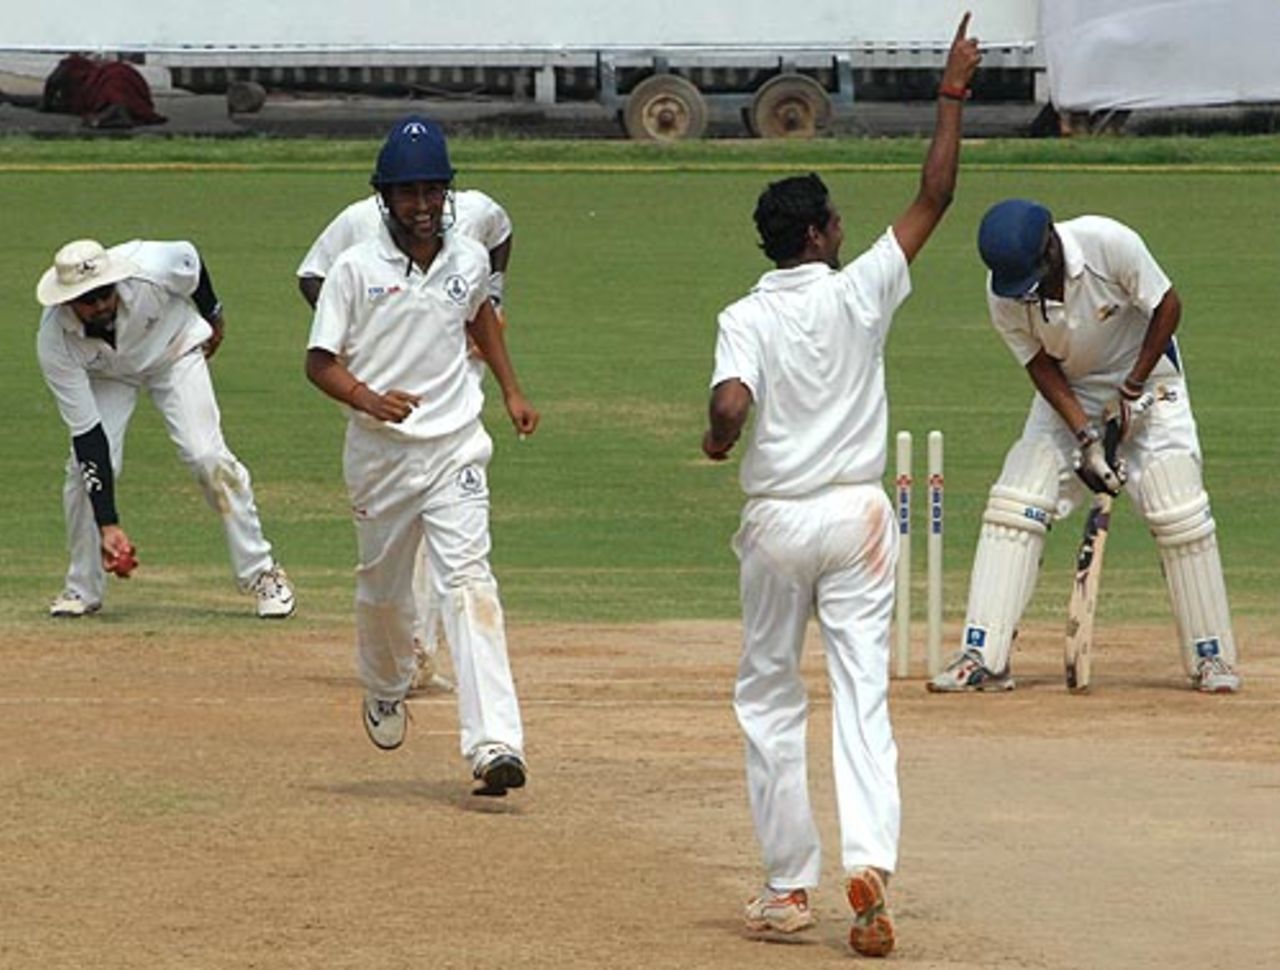 Tamil Nadu's R Ramkumar celebrates one of his three wickets, Tamil Nadu v Himachal Pradesh, Ranji Trophy Super League, Group A, 5th round, Chennai, 4th day, December 12, 2007 